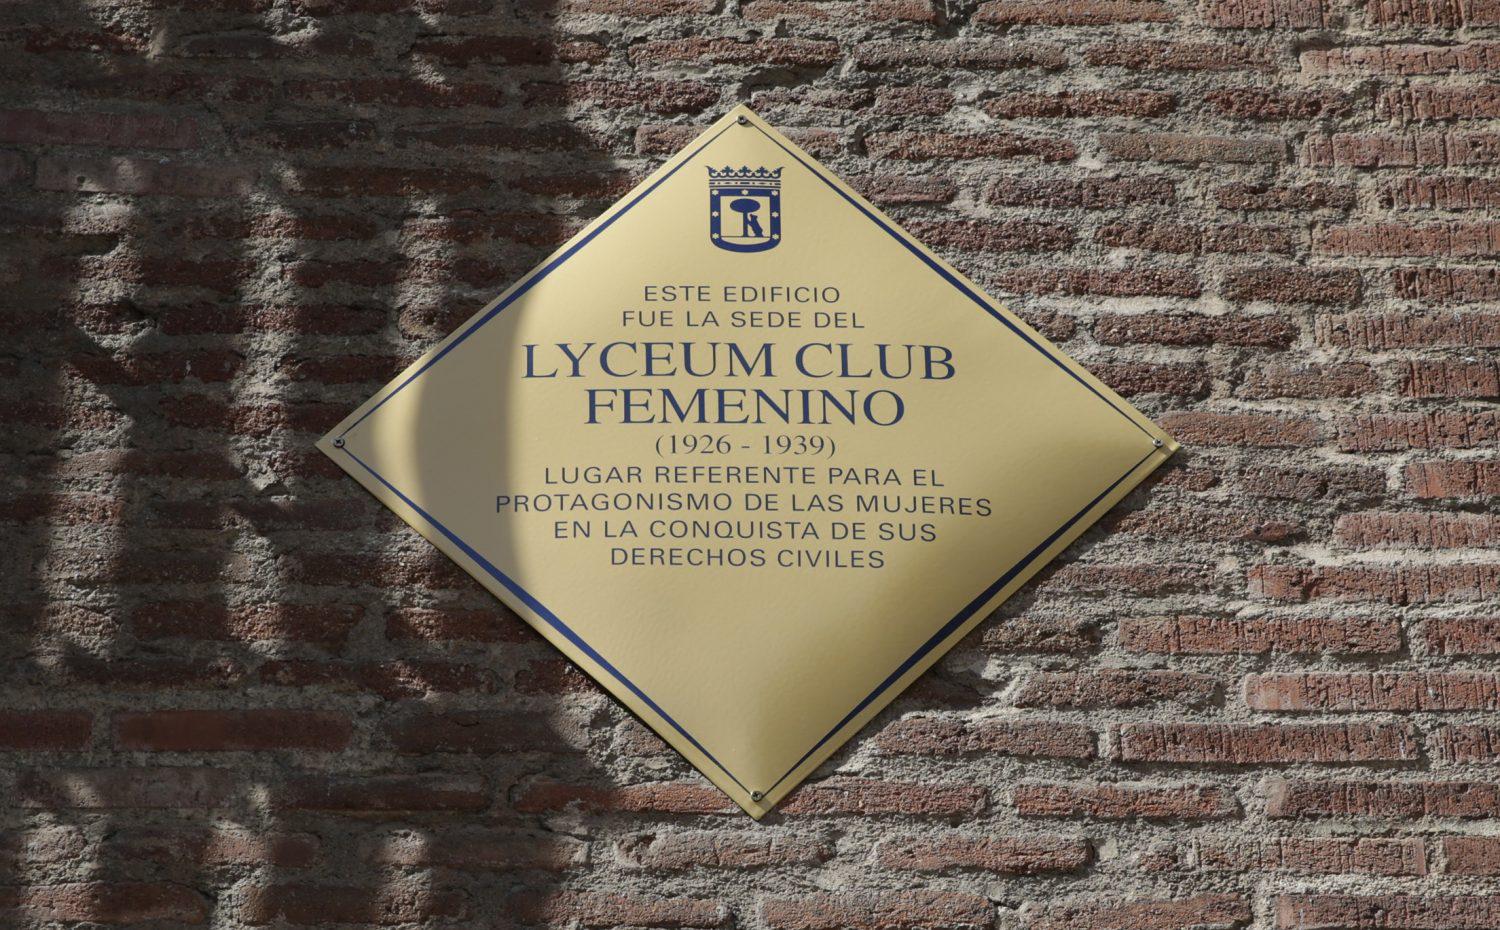 Lyceum Club Femenino - Wikipedia, la enciclopedia libre